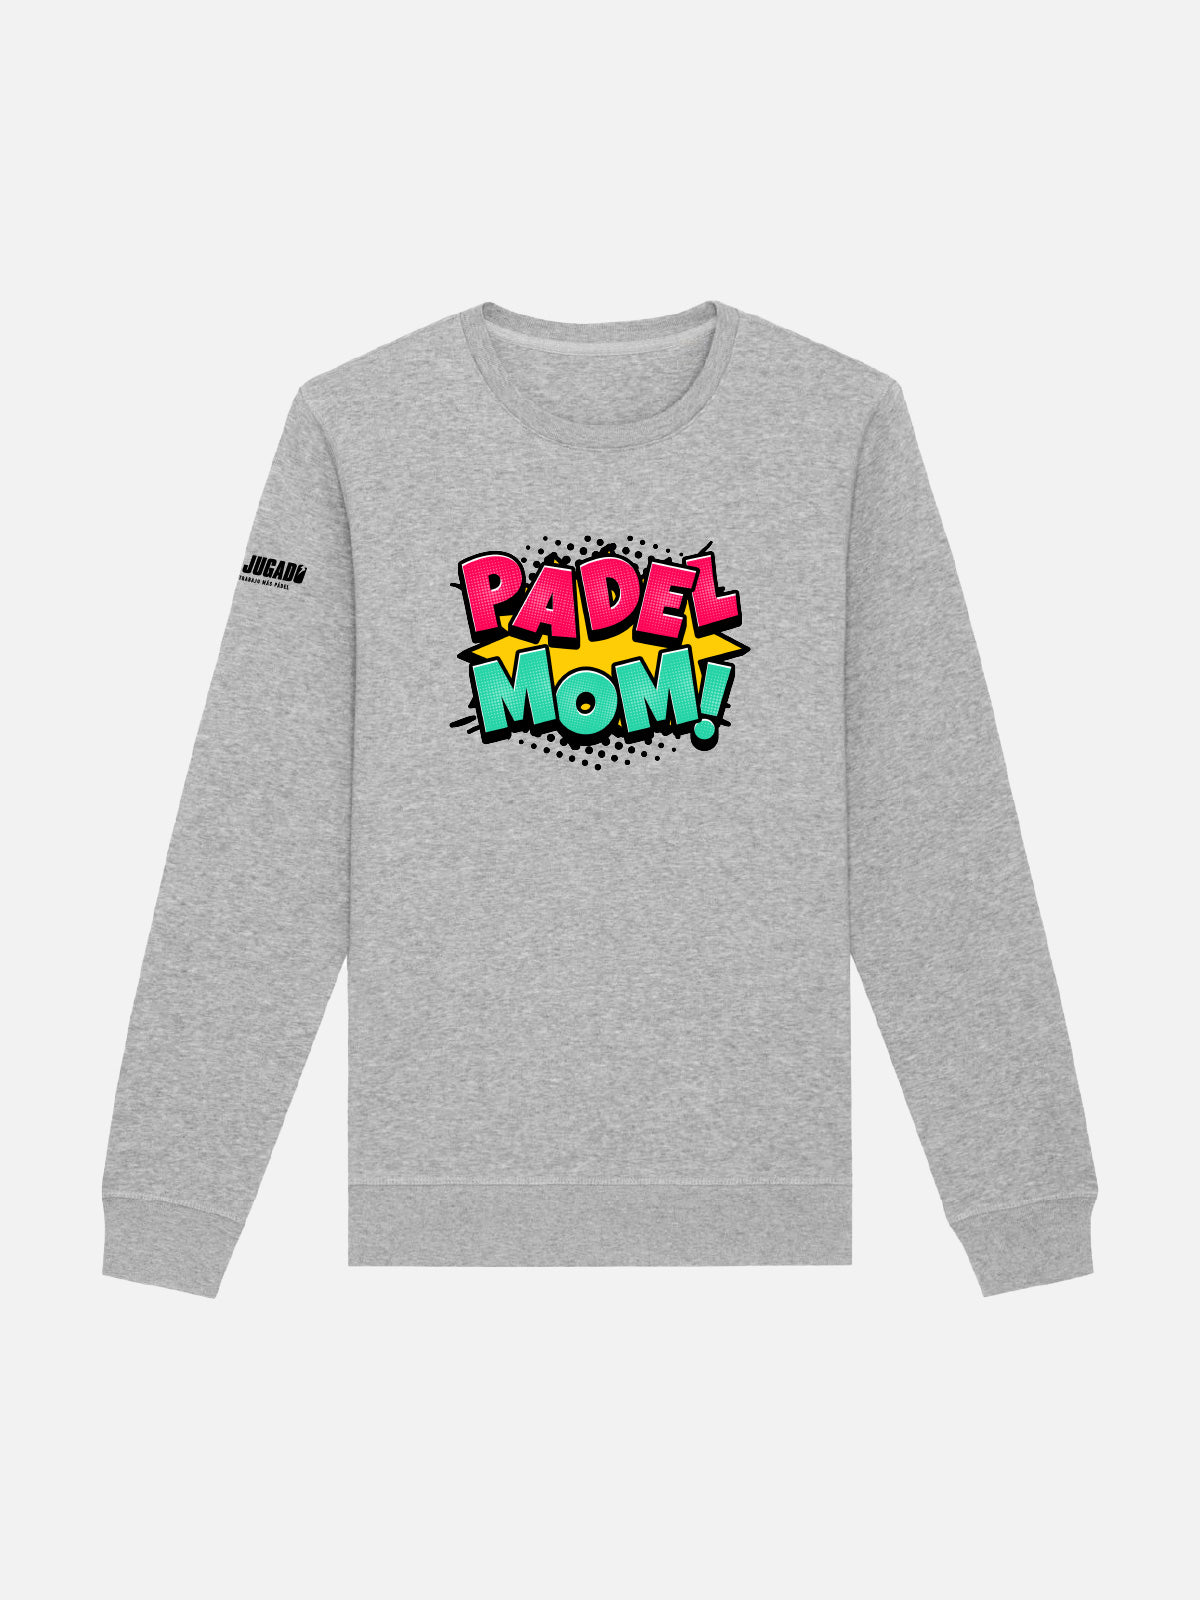 Unisex Fun Sweatshirt - Padel Mom